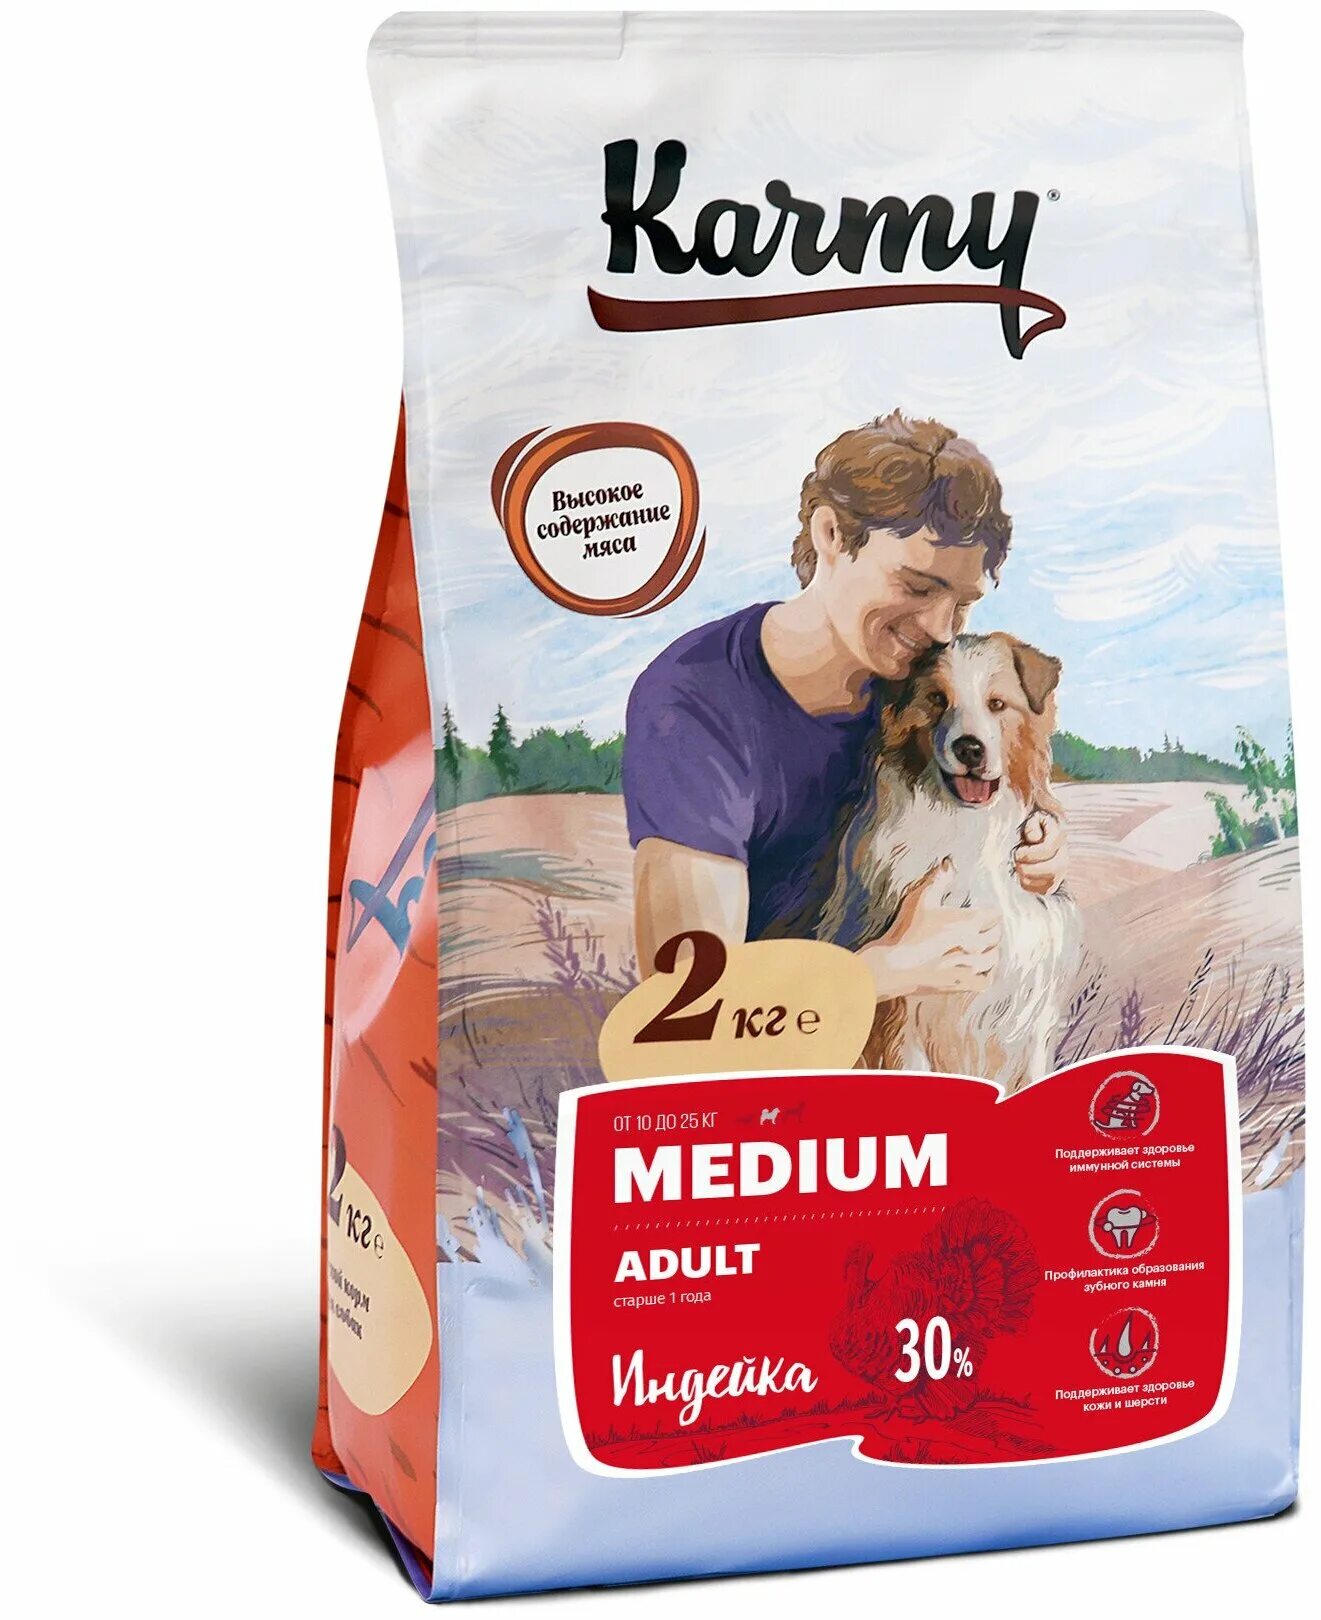 Karmy для собак телятина 15кг Medium Junior. Сухой корм karmy для собак средних 14кг. Сухой корм для собак karmy Mini Adult индейка 2кг. Карми корм для собак 14 кг. Karmy для собак купить